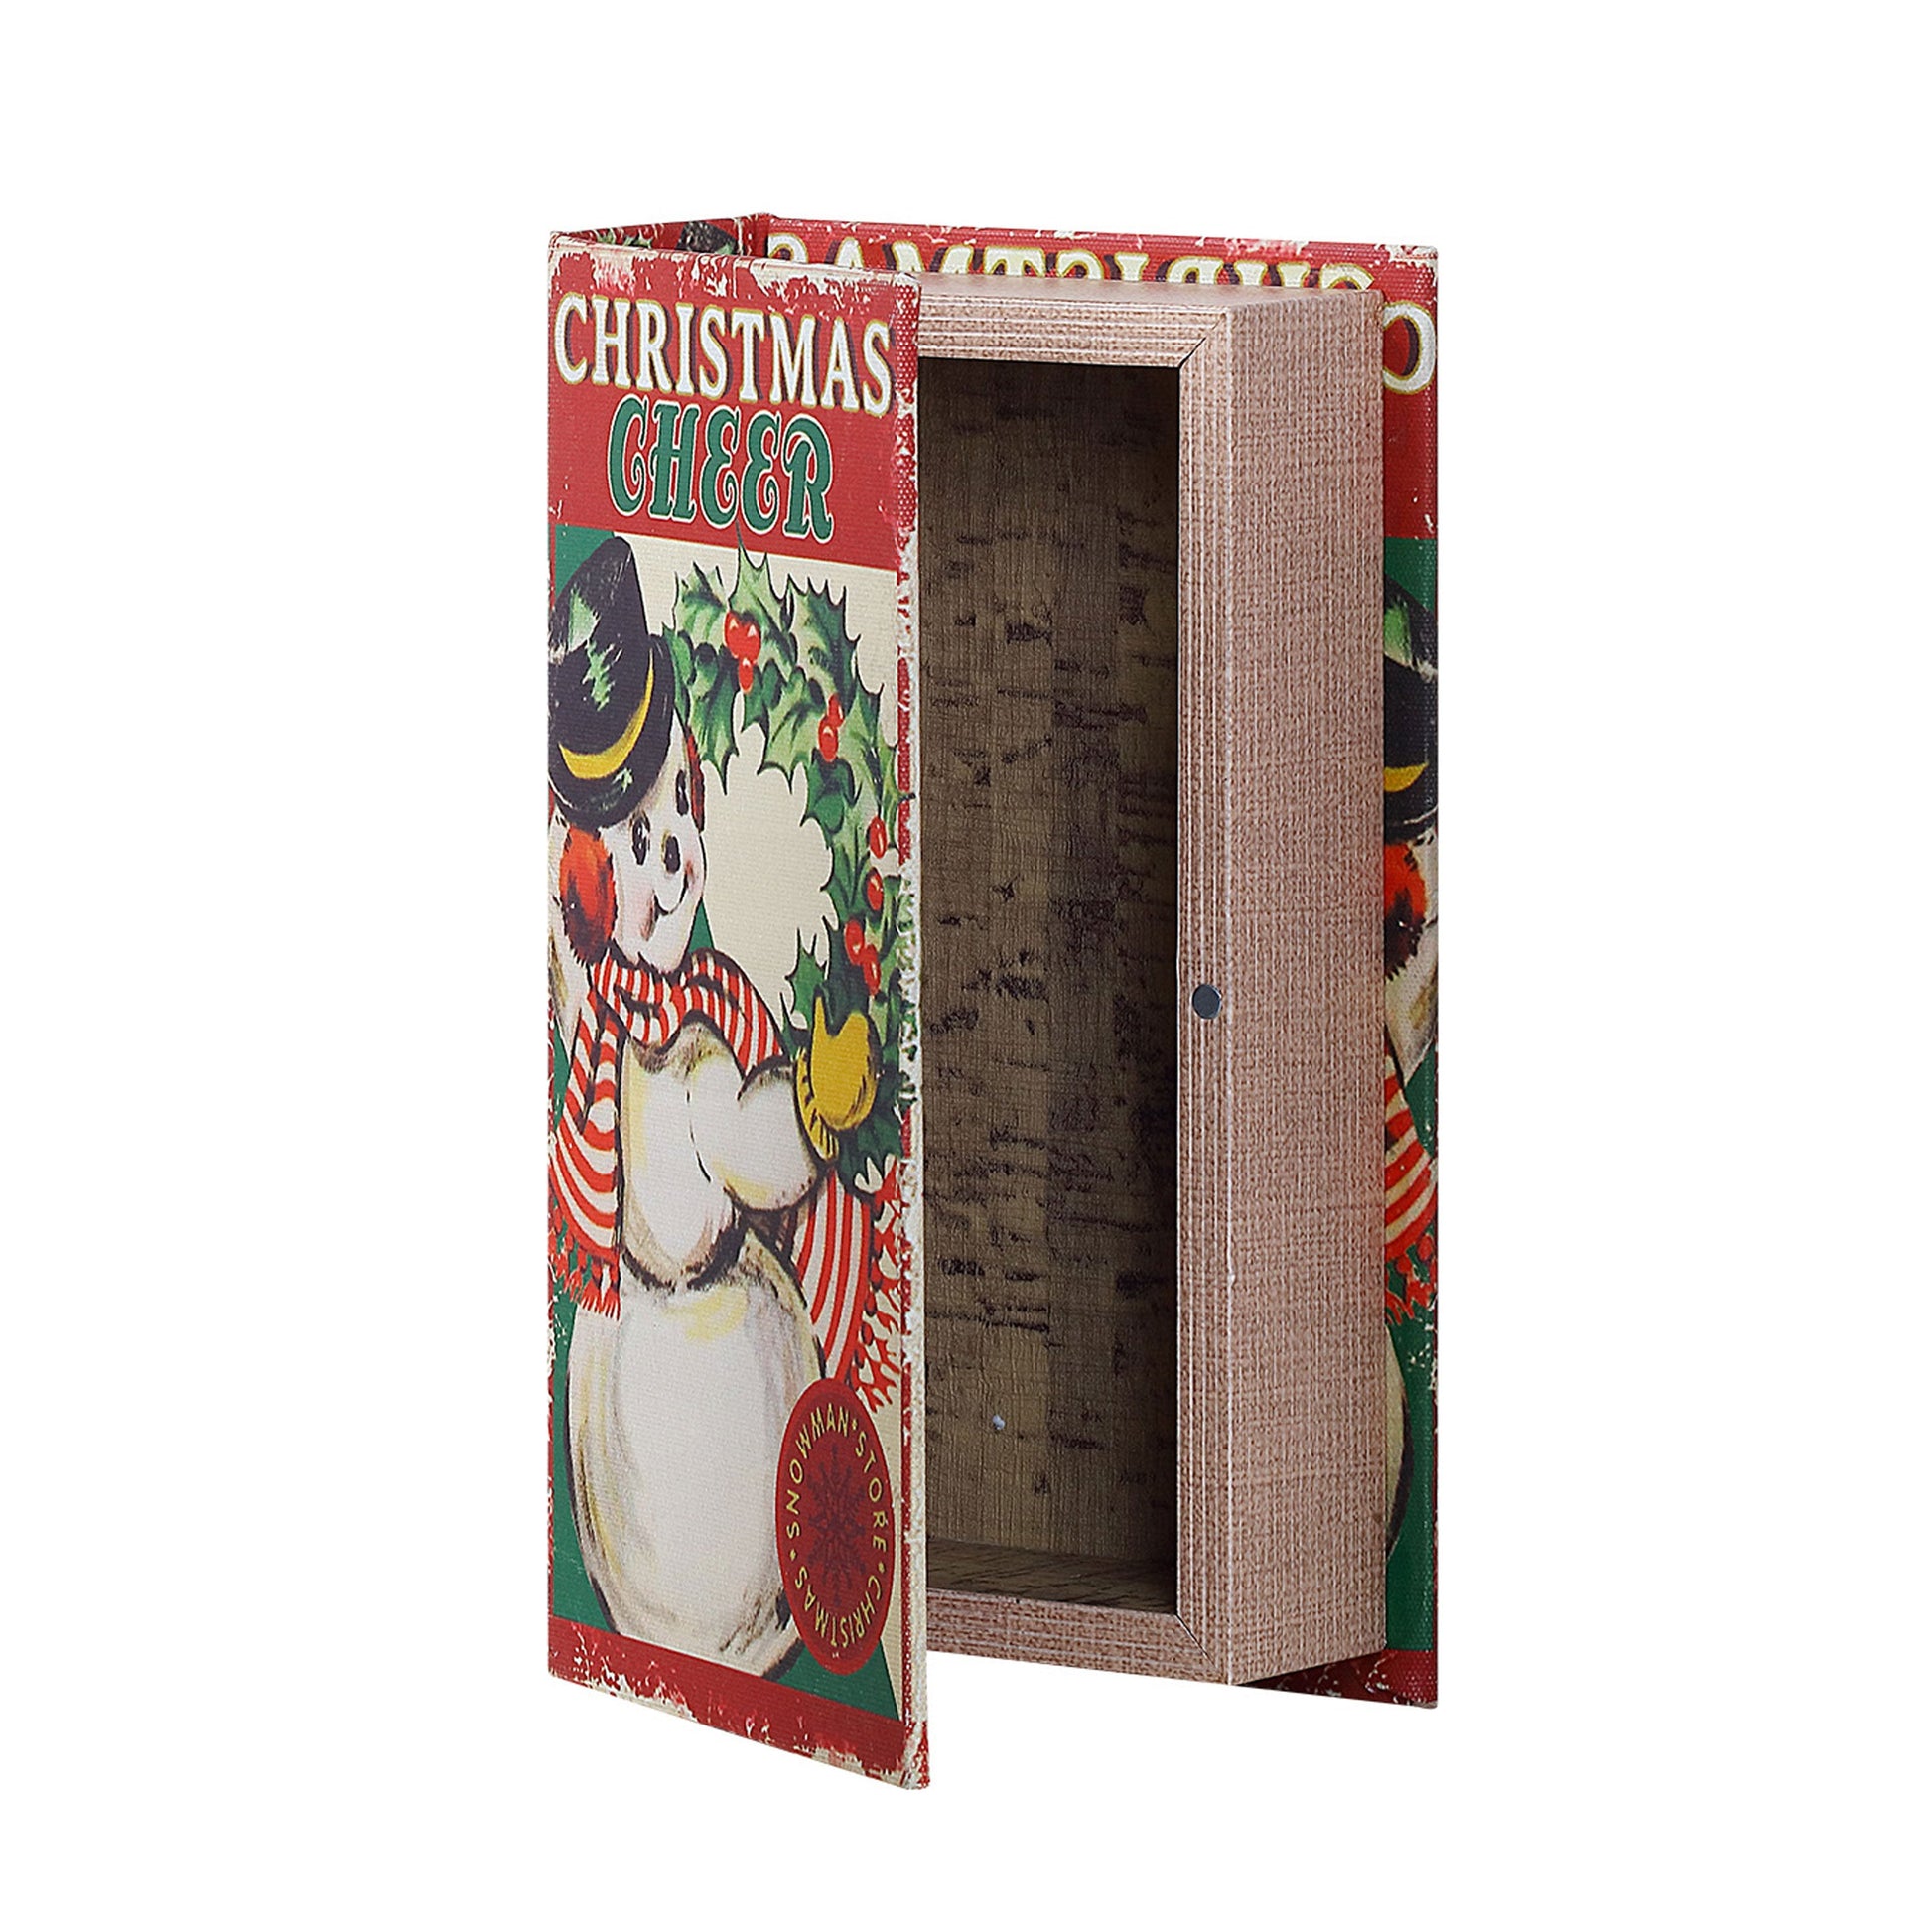 8.4" Vintage Storage Box - Snowman - Mr. Christmas